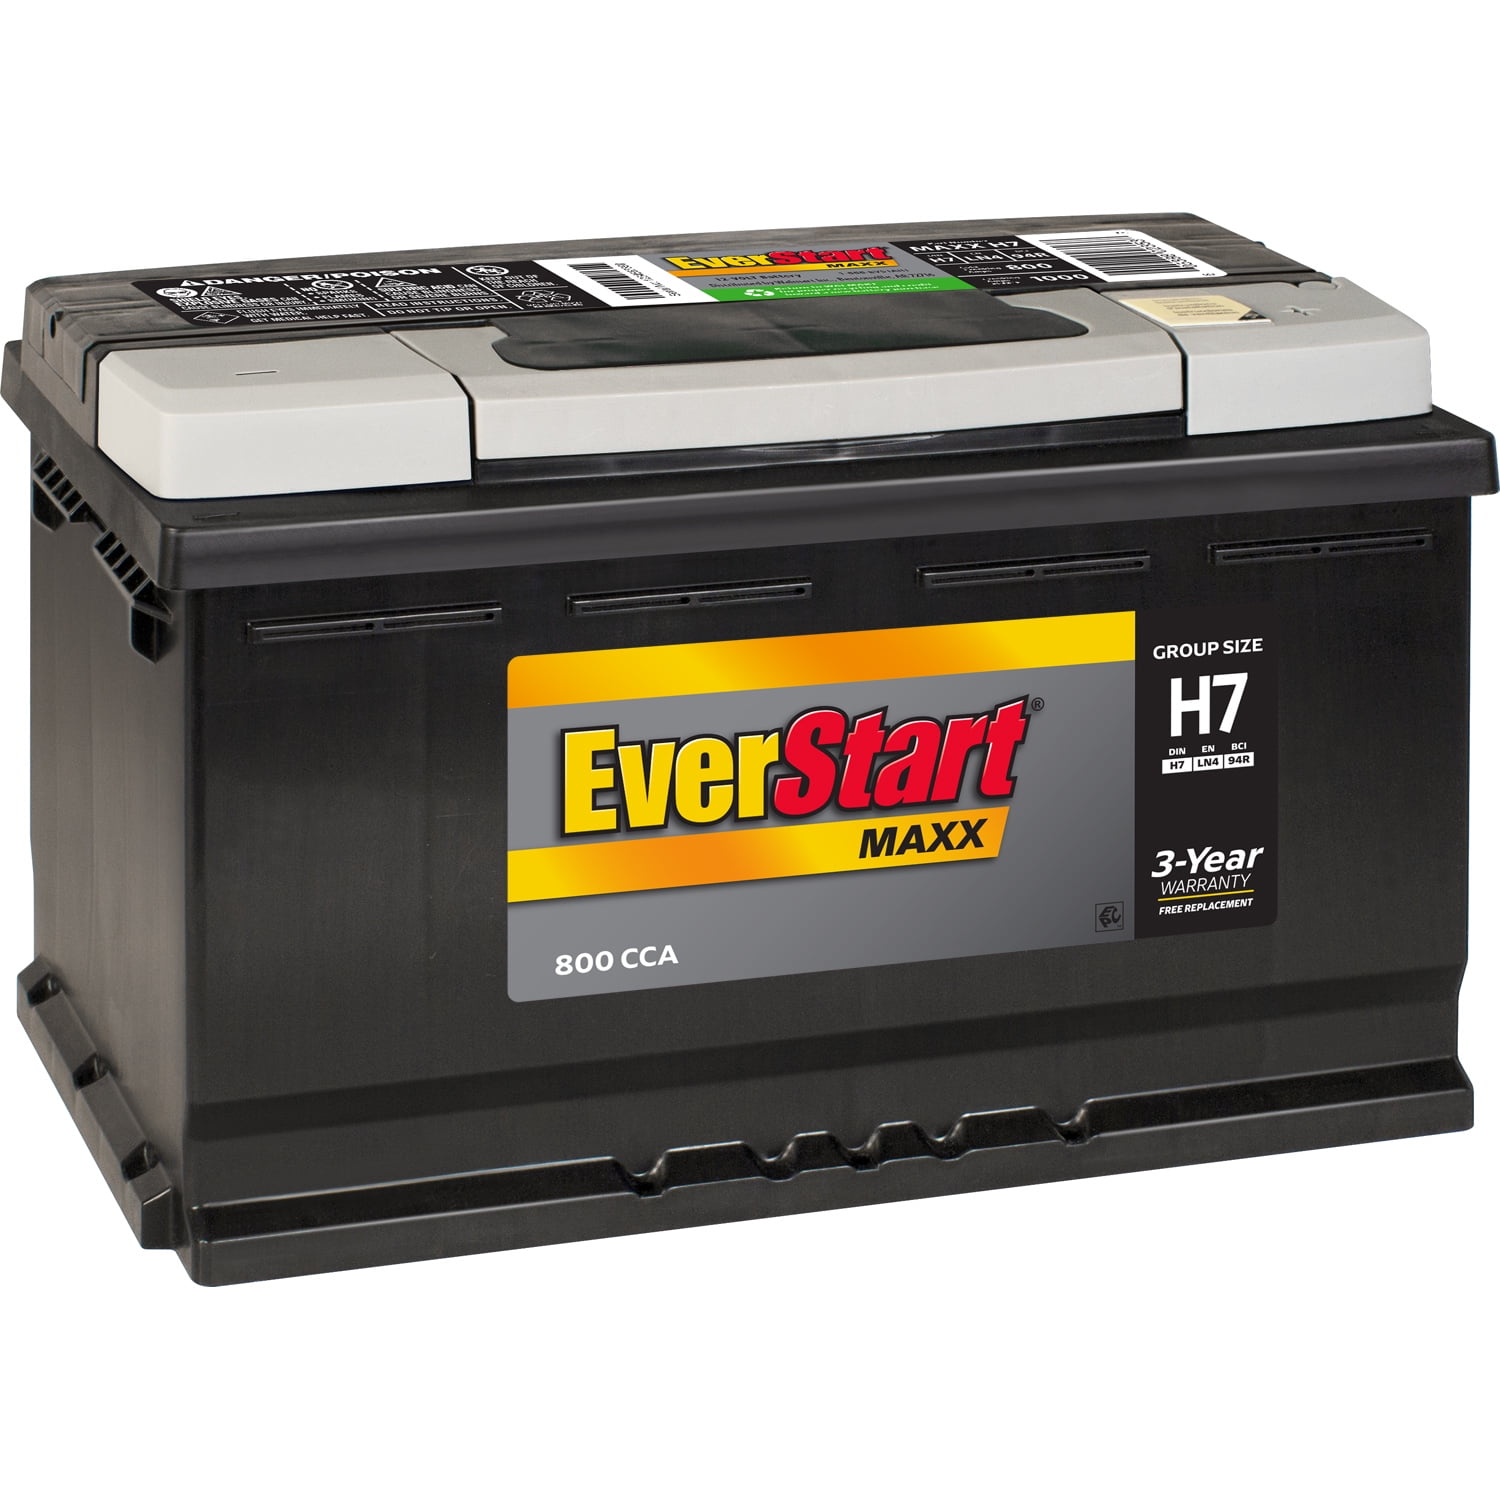 EverStart Maxx Lead Acid Automotive Battery, Group Size H7 (12 Volt/800 CCA)